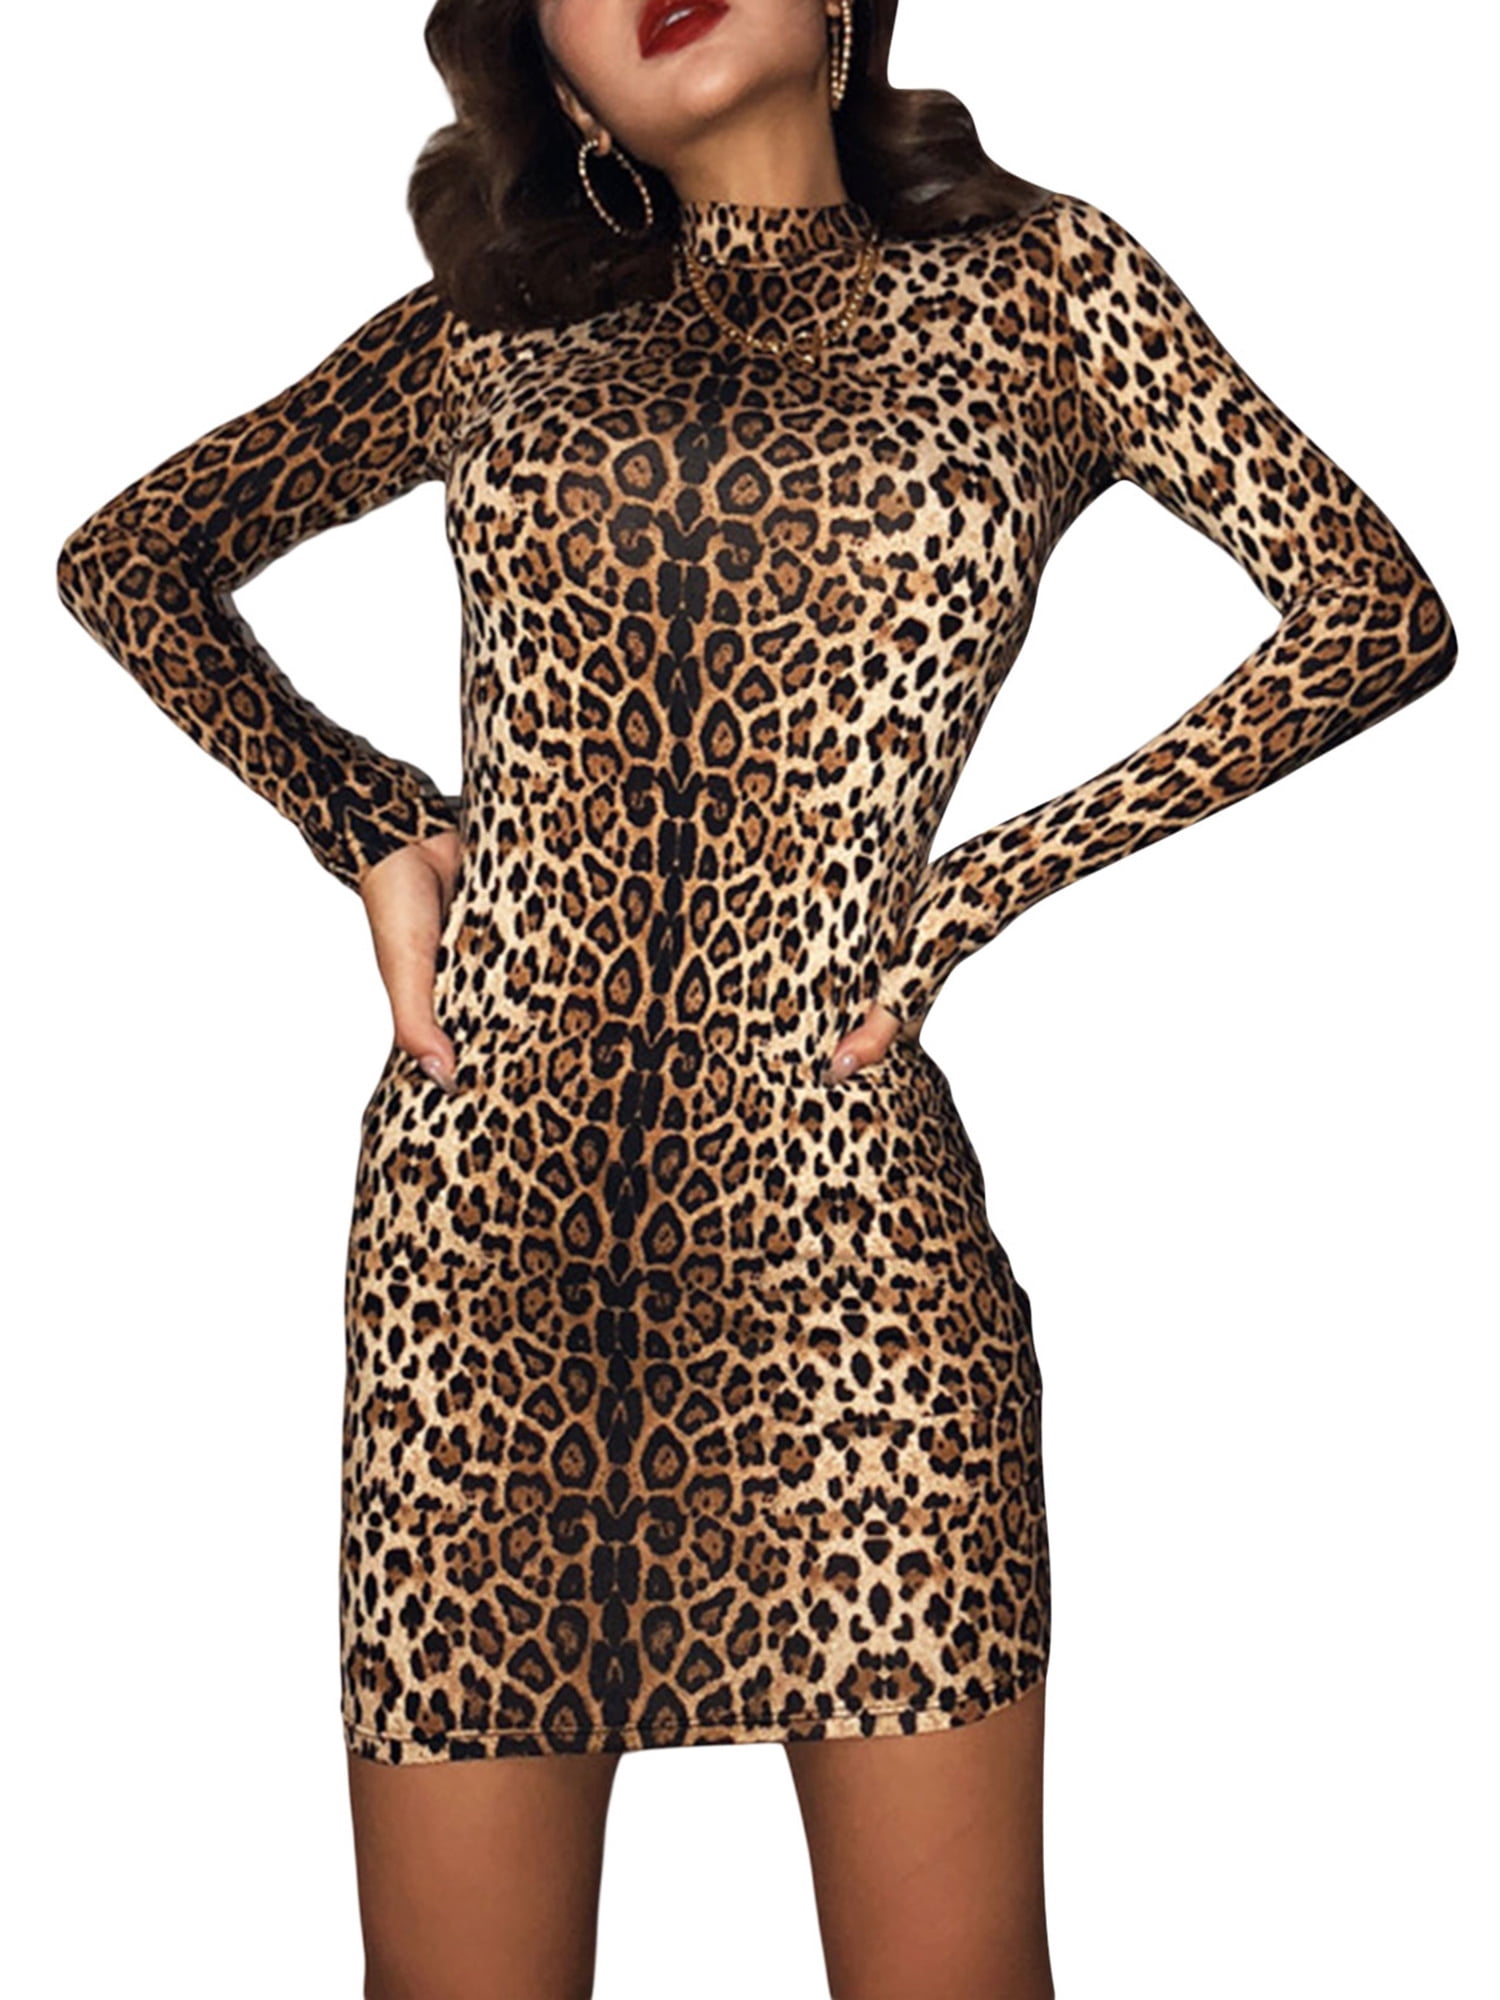 suanret Womens Mini Dress Leopard Strappy Dress Sleeveless Slim Pencil Party Club Evening Dress Snakeskin Print Dress 